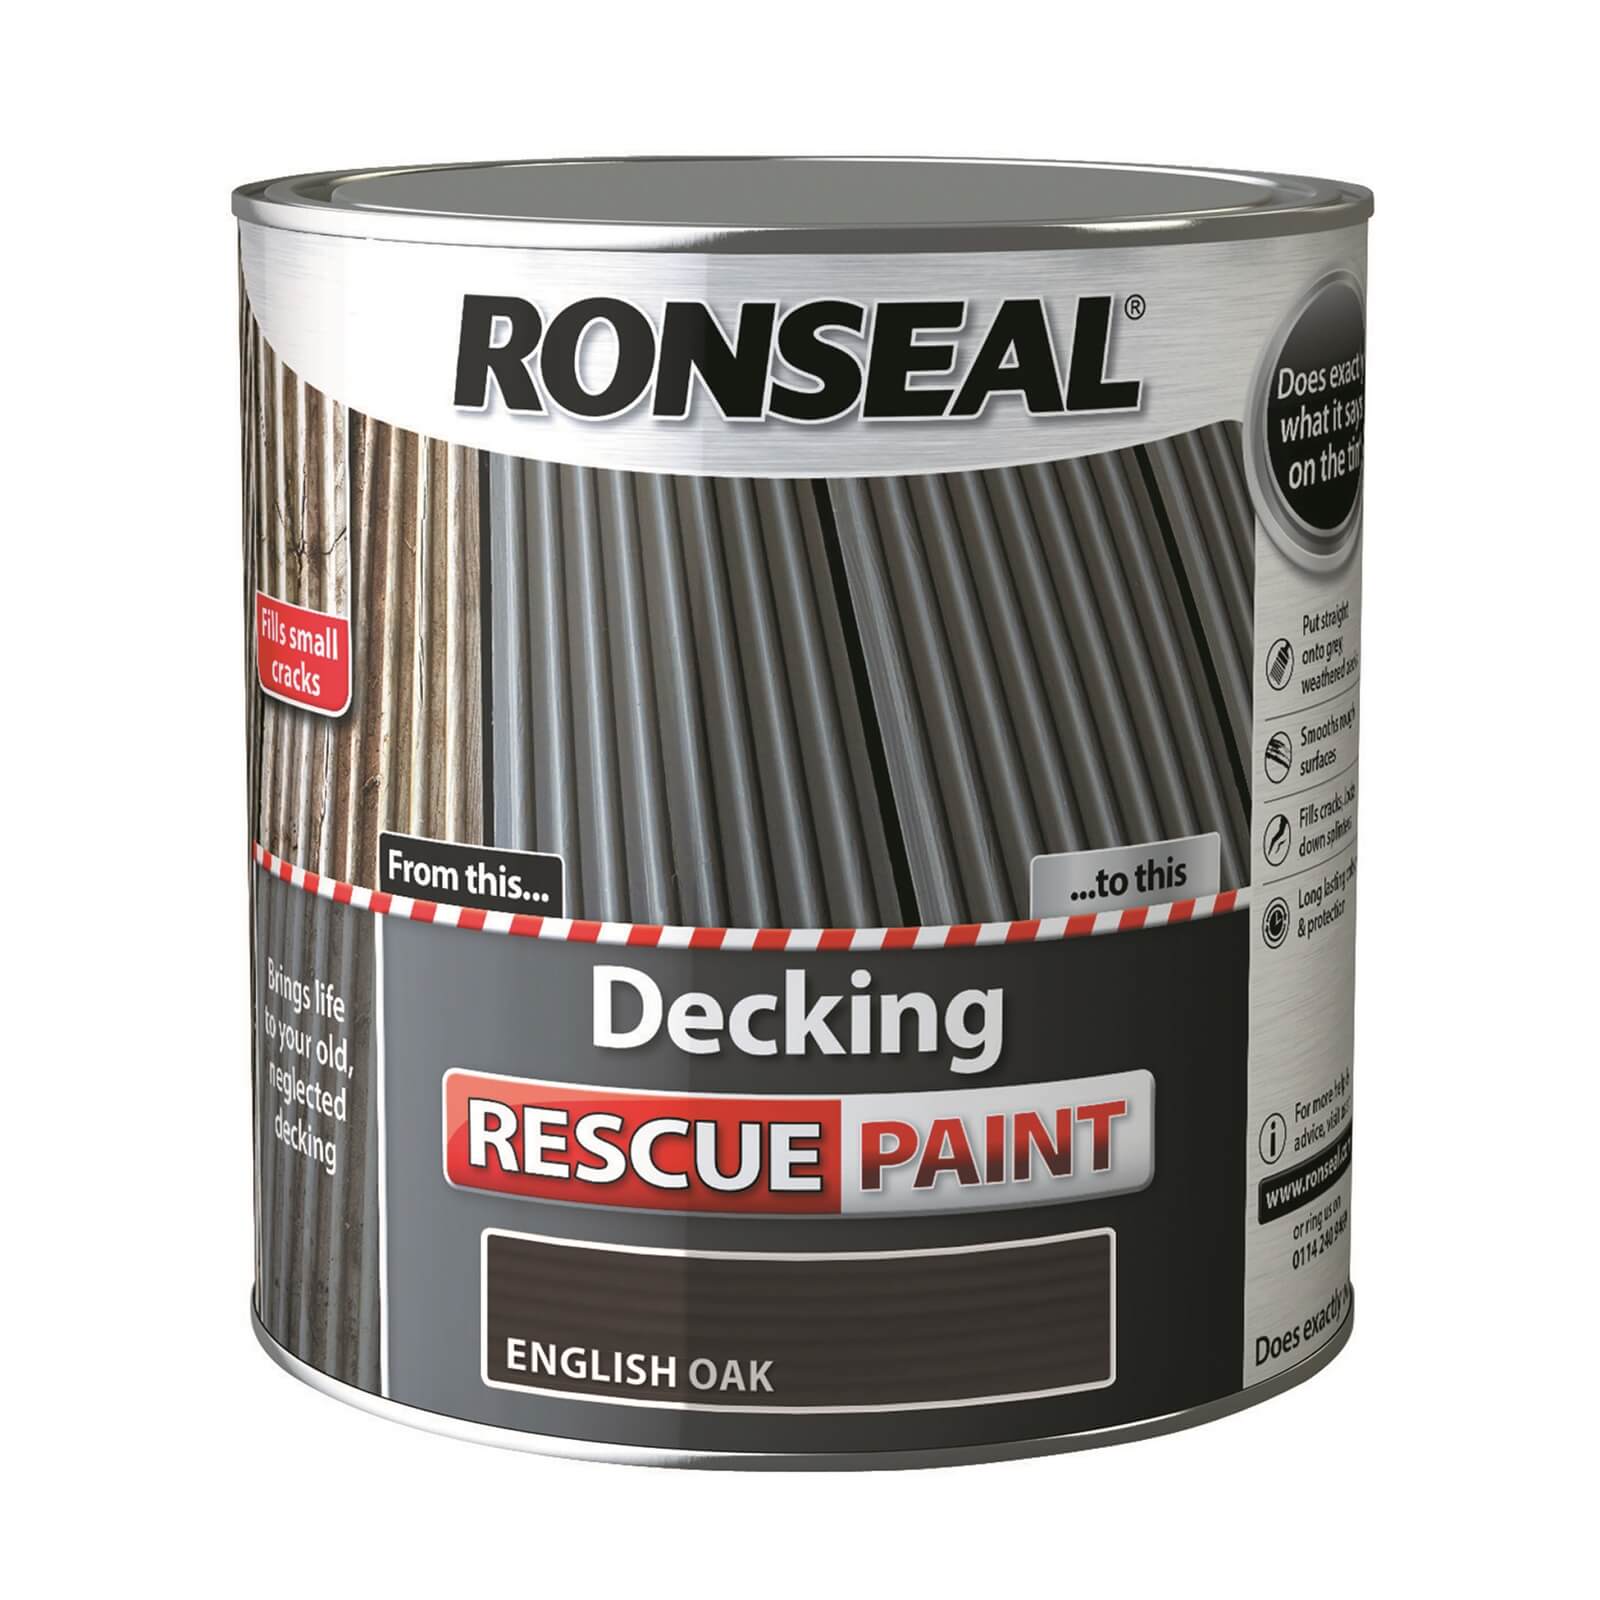 Ronseal Decking Rescue Paint English Oak - 2.5L